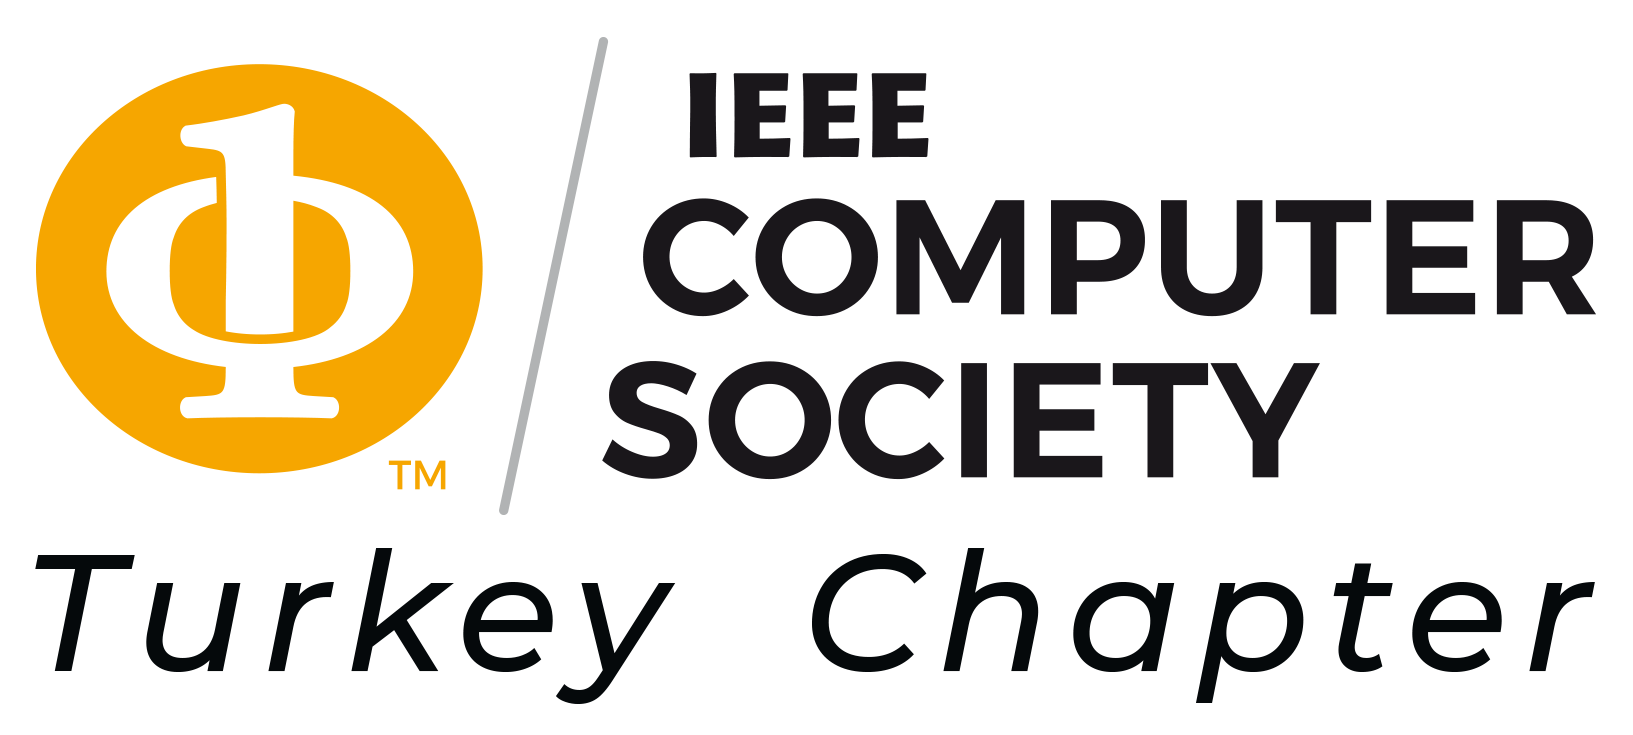 IEEE Computer Society Turkey